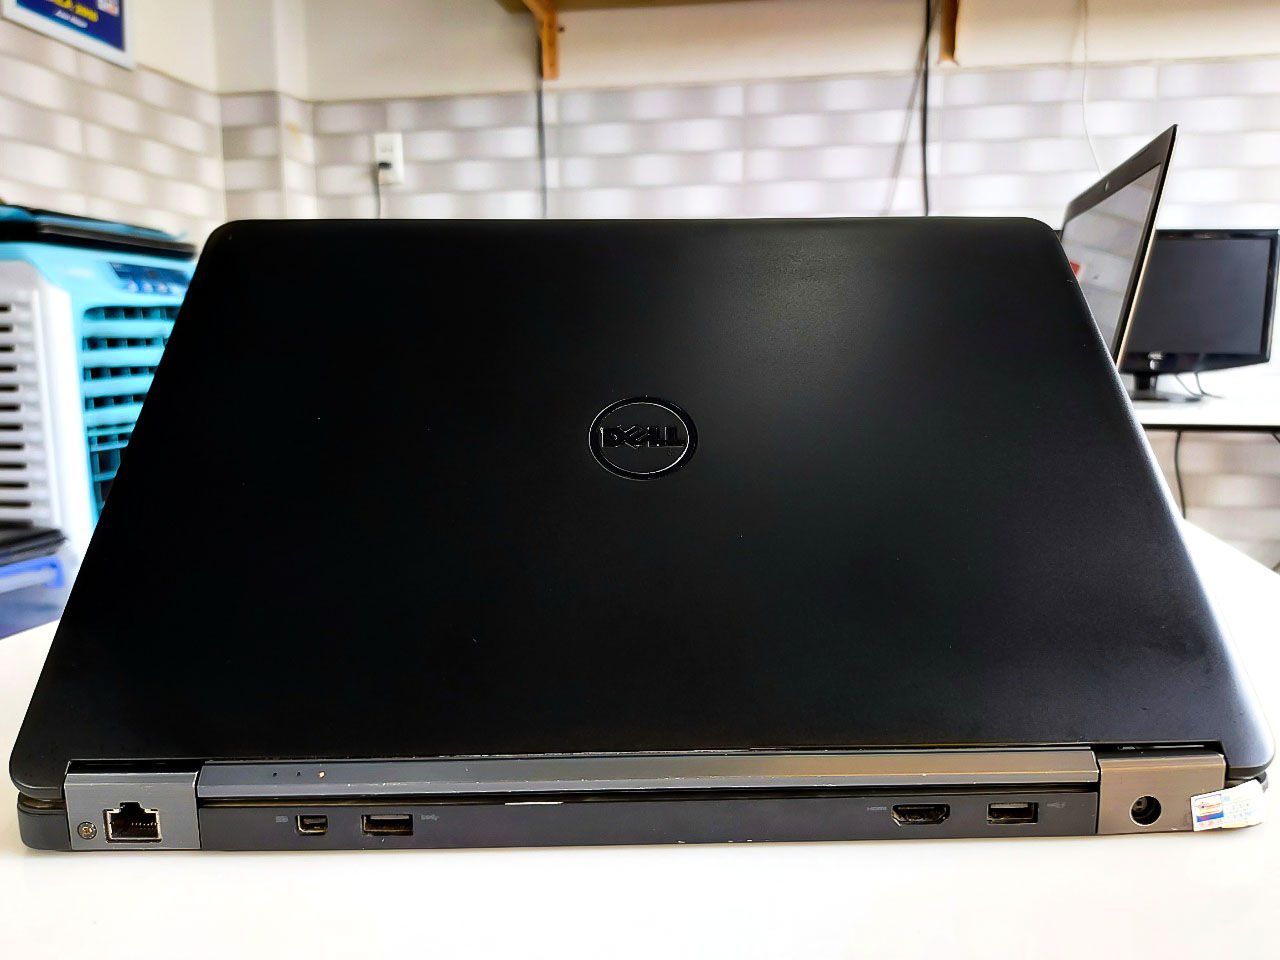 Dell Latitude E7450 - laptopdanang